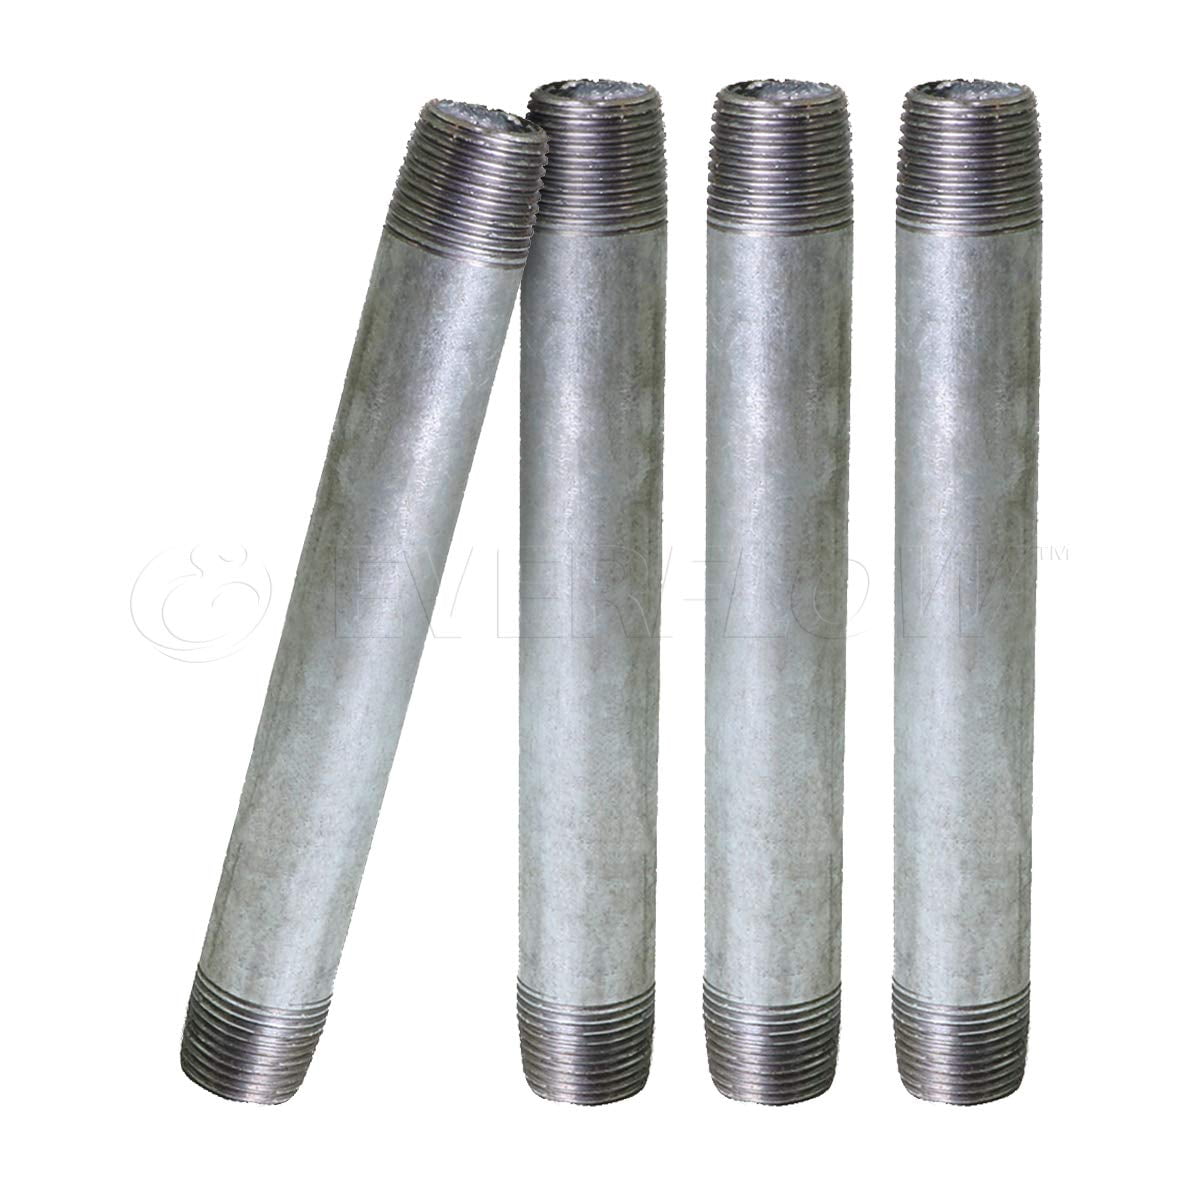 8-Pack 2" NPT x 2-1/2" Threaded Galvanized Steel Pipe Nipple 